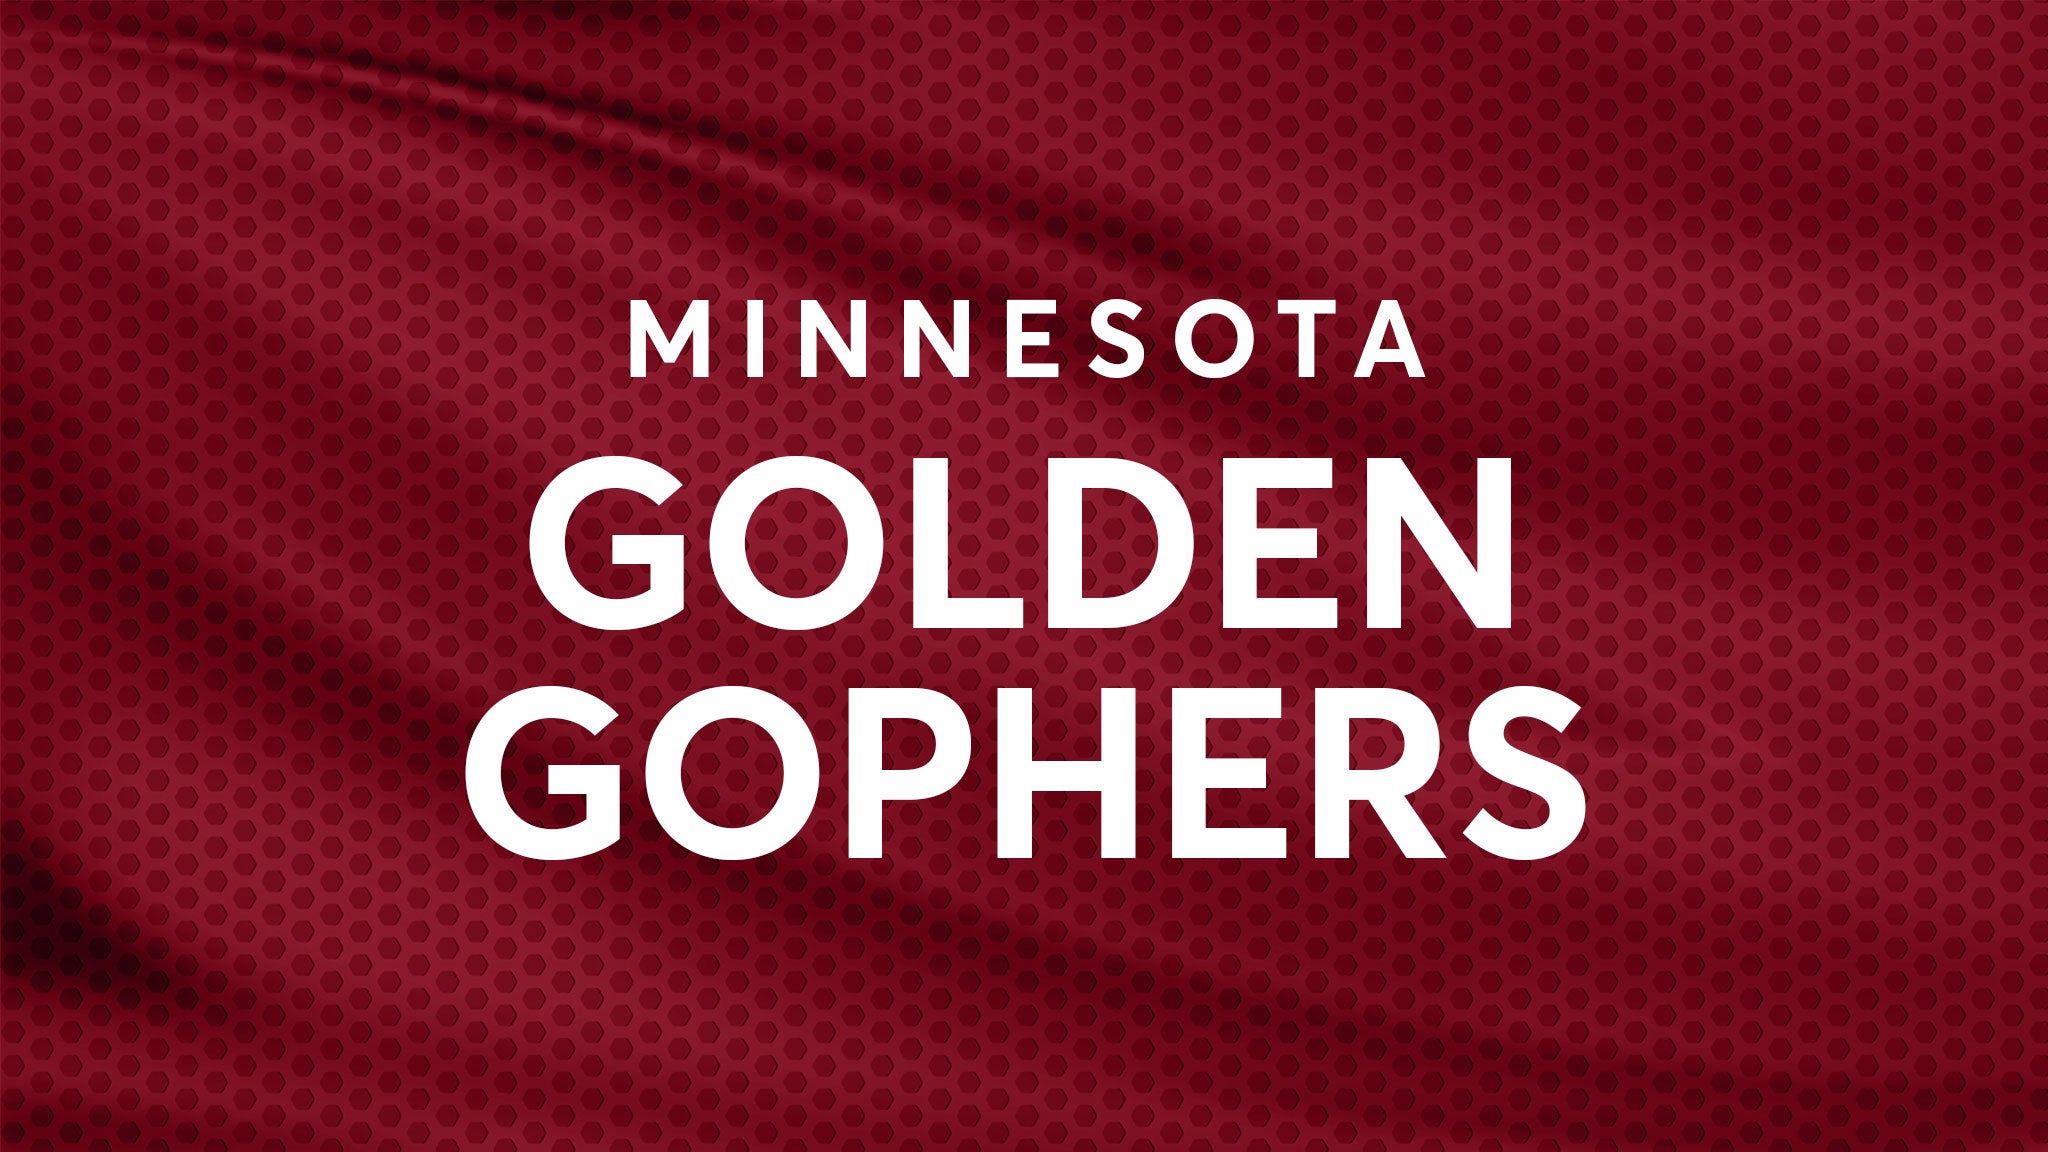 Minnesota Gophers Football vs. Maryland Terrapins Football hero